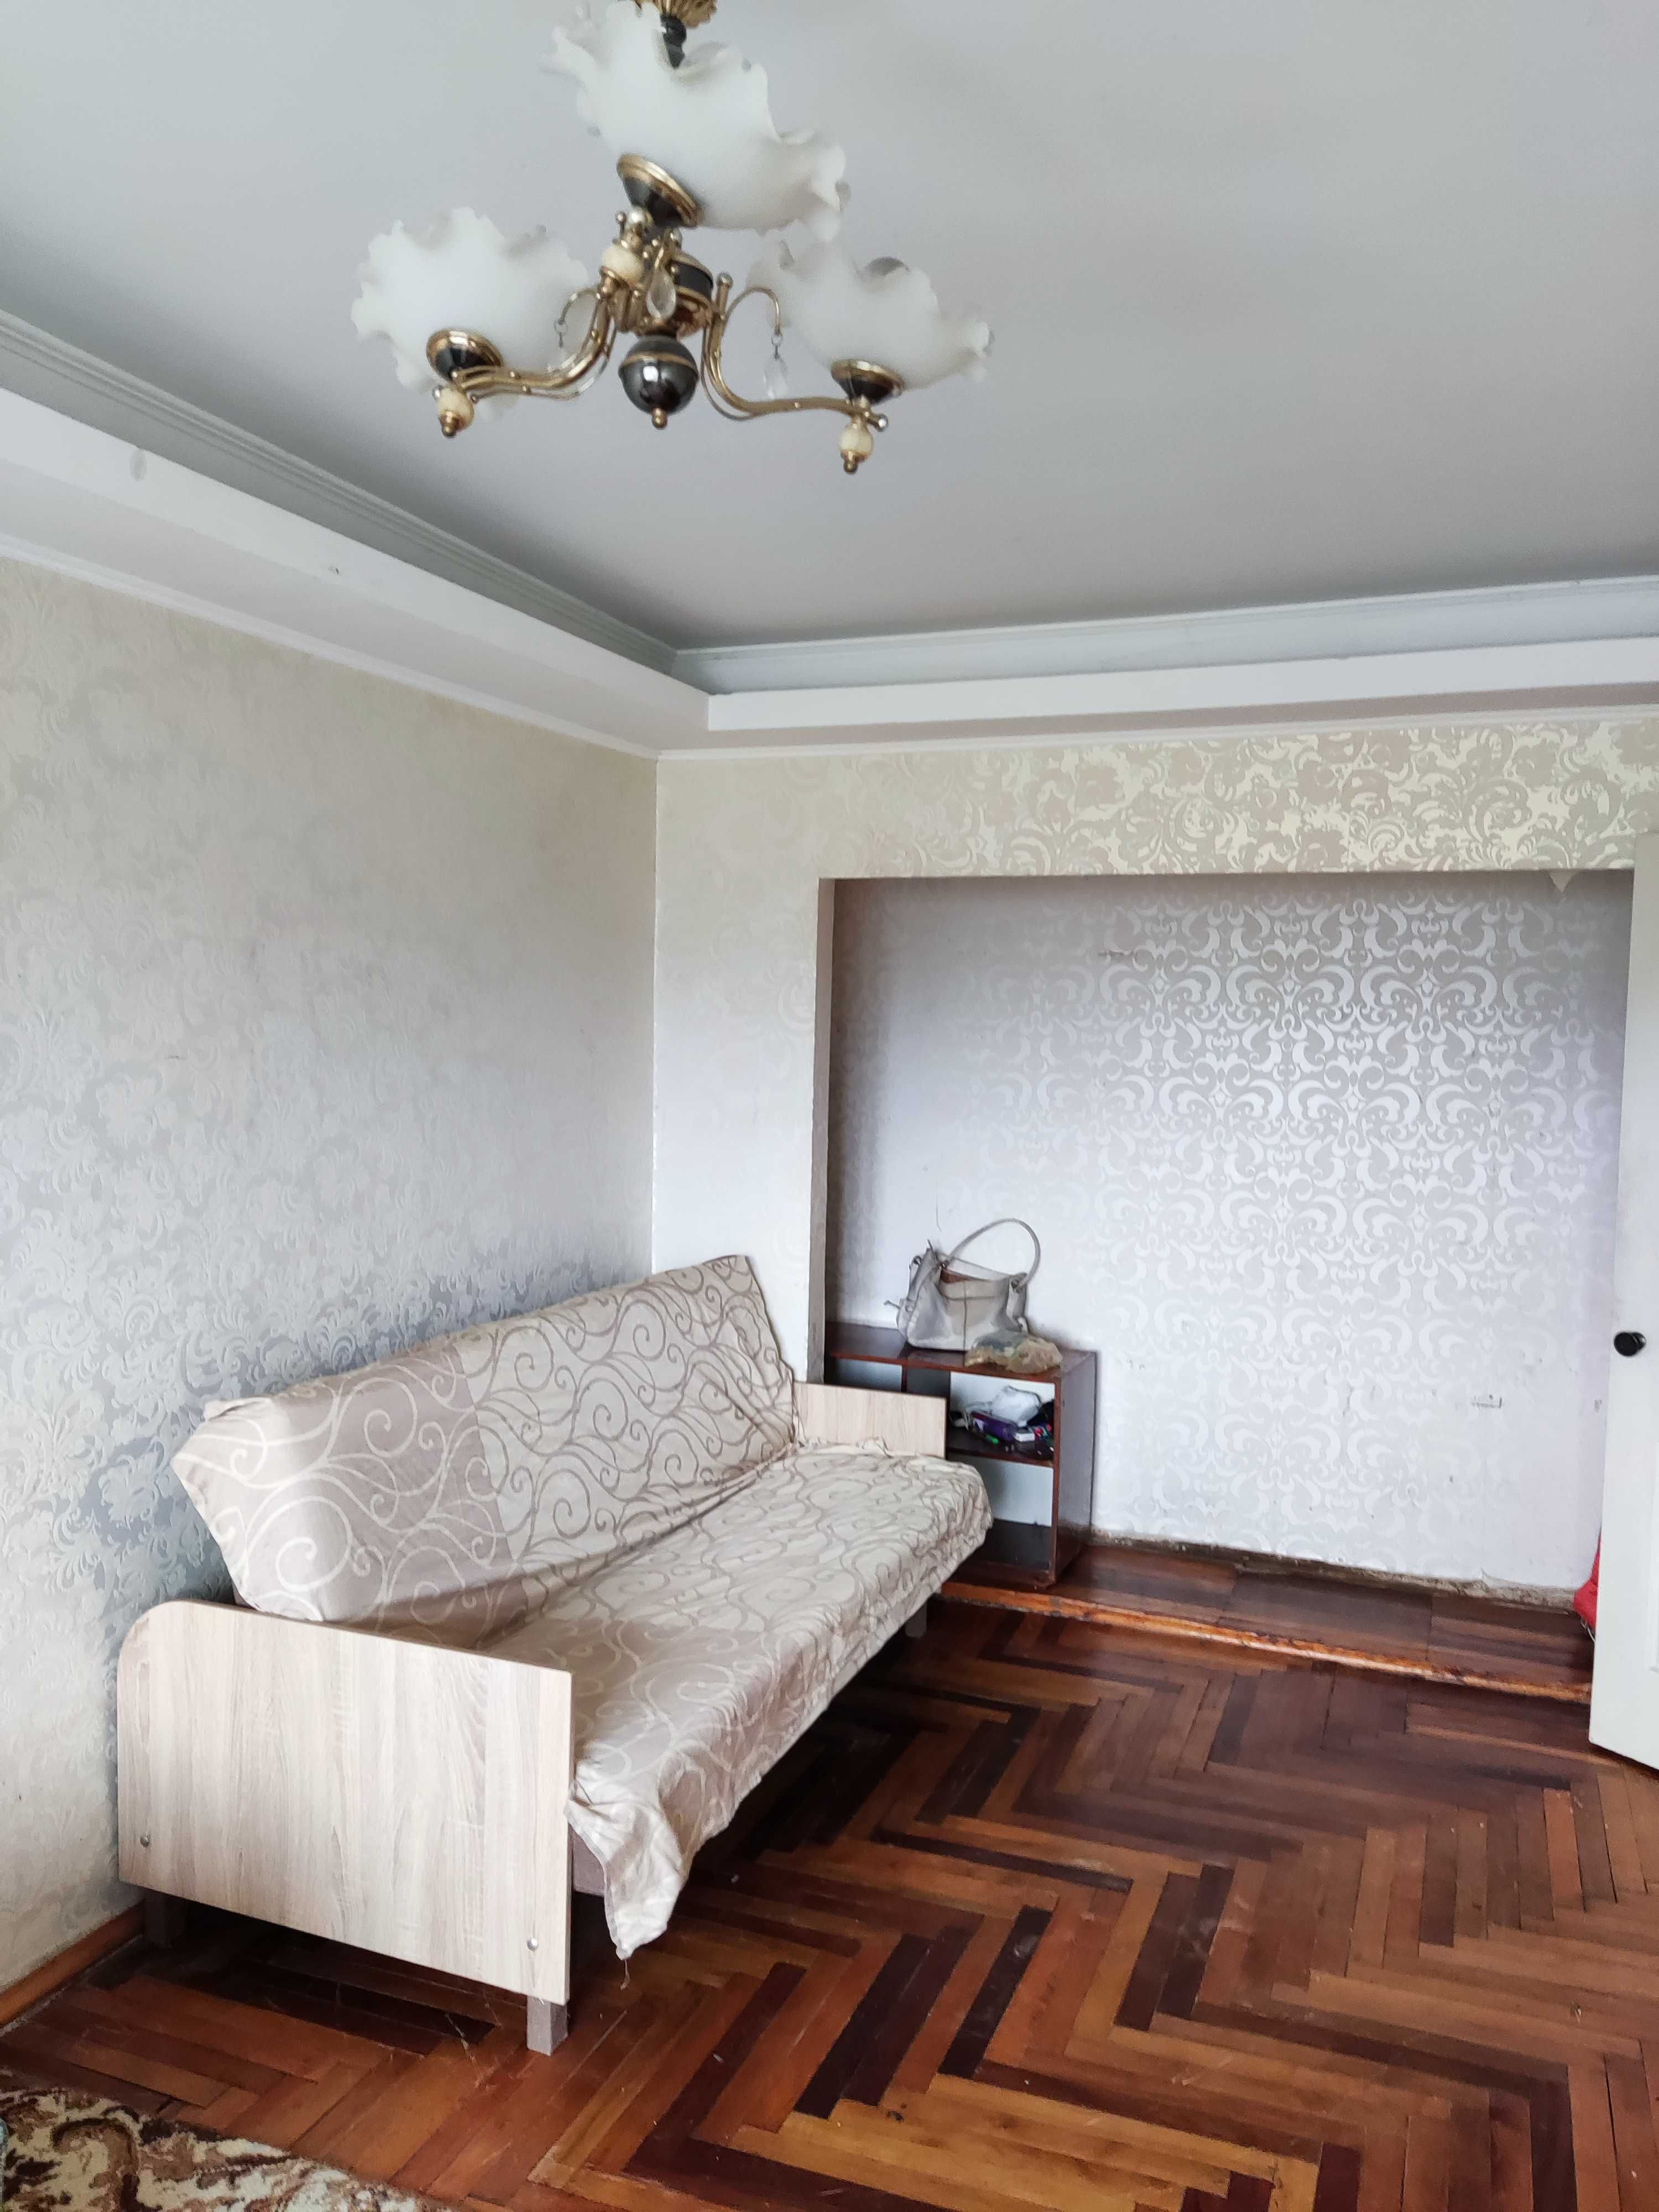 Сдам 1-комнатную квартиру в Александровском районе 6000 грн.